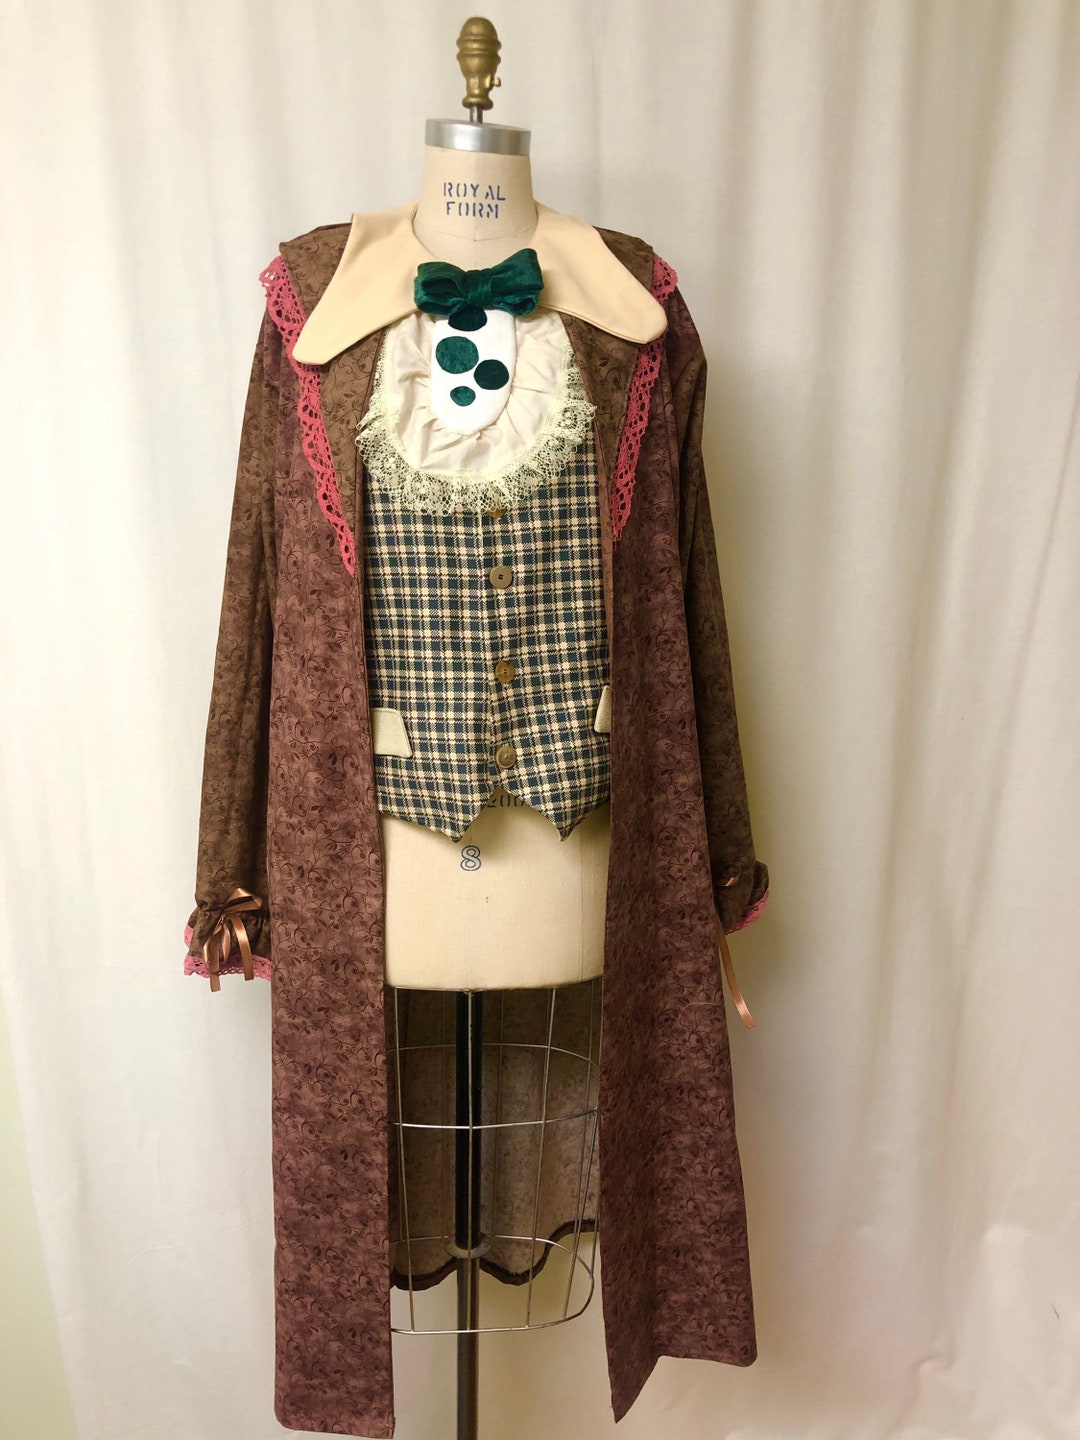 Ron Wemel jurk gewaden Harry Potter yule bal comi-con kostuum cosplay Kleding Herenkleding Pakken 